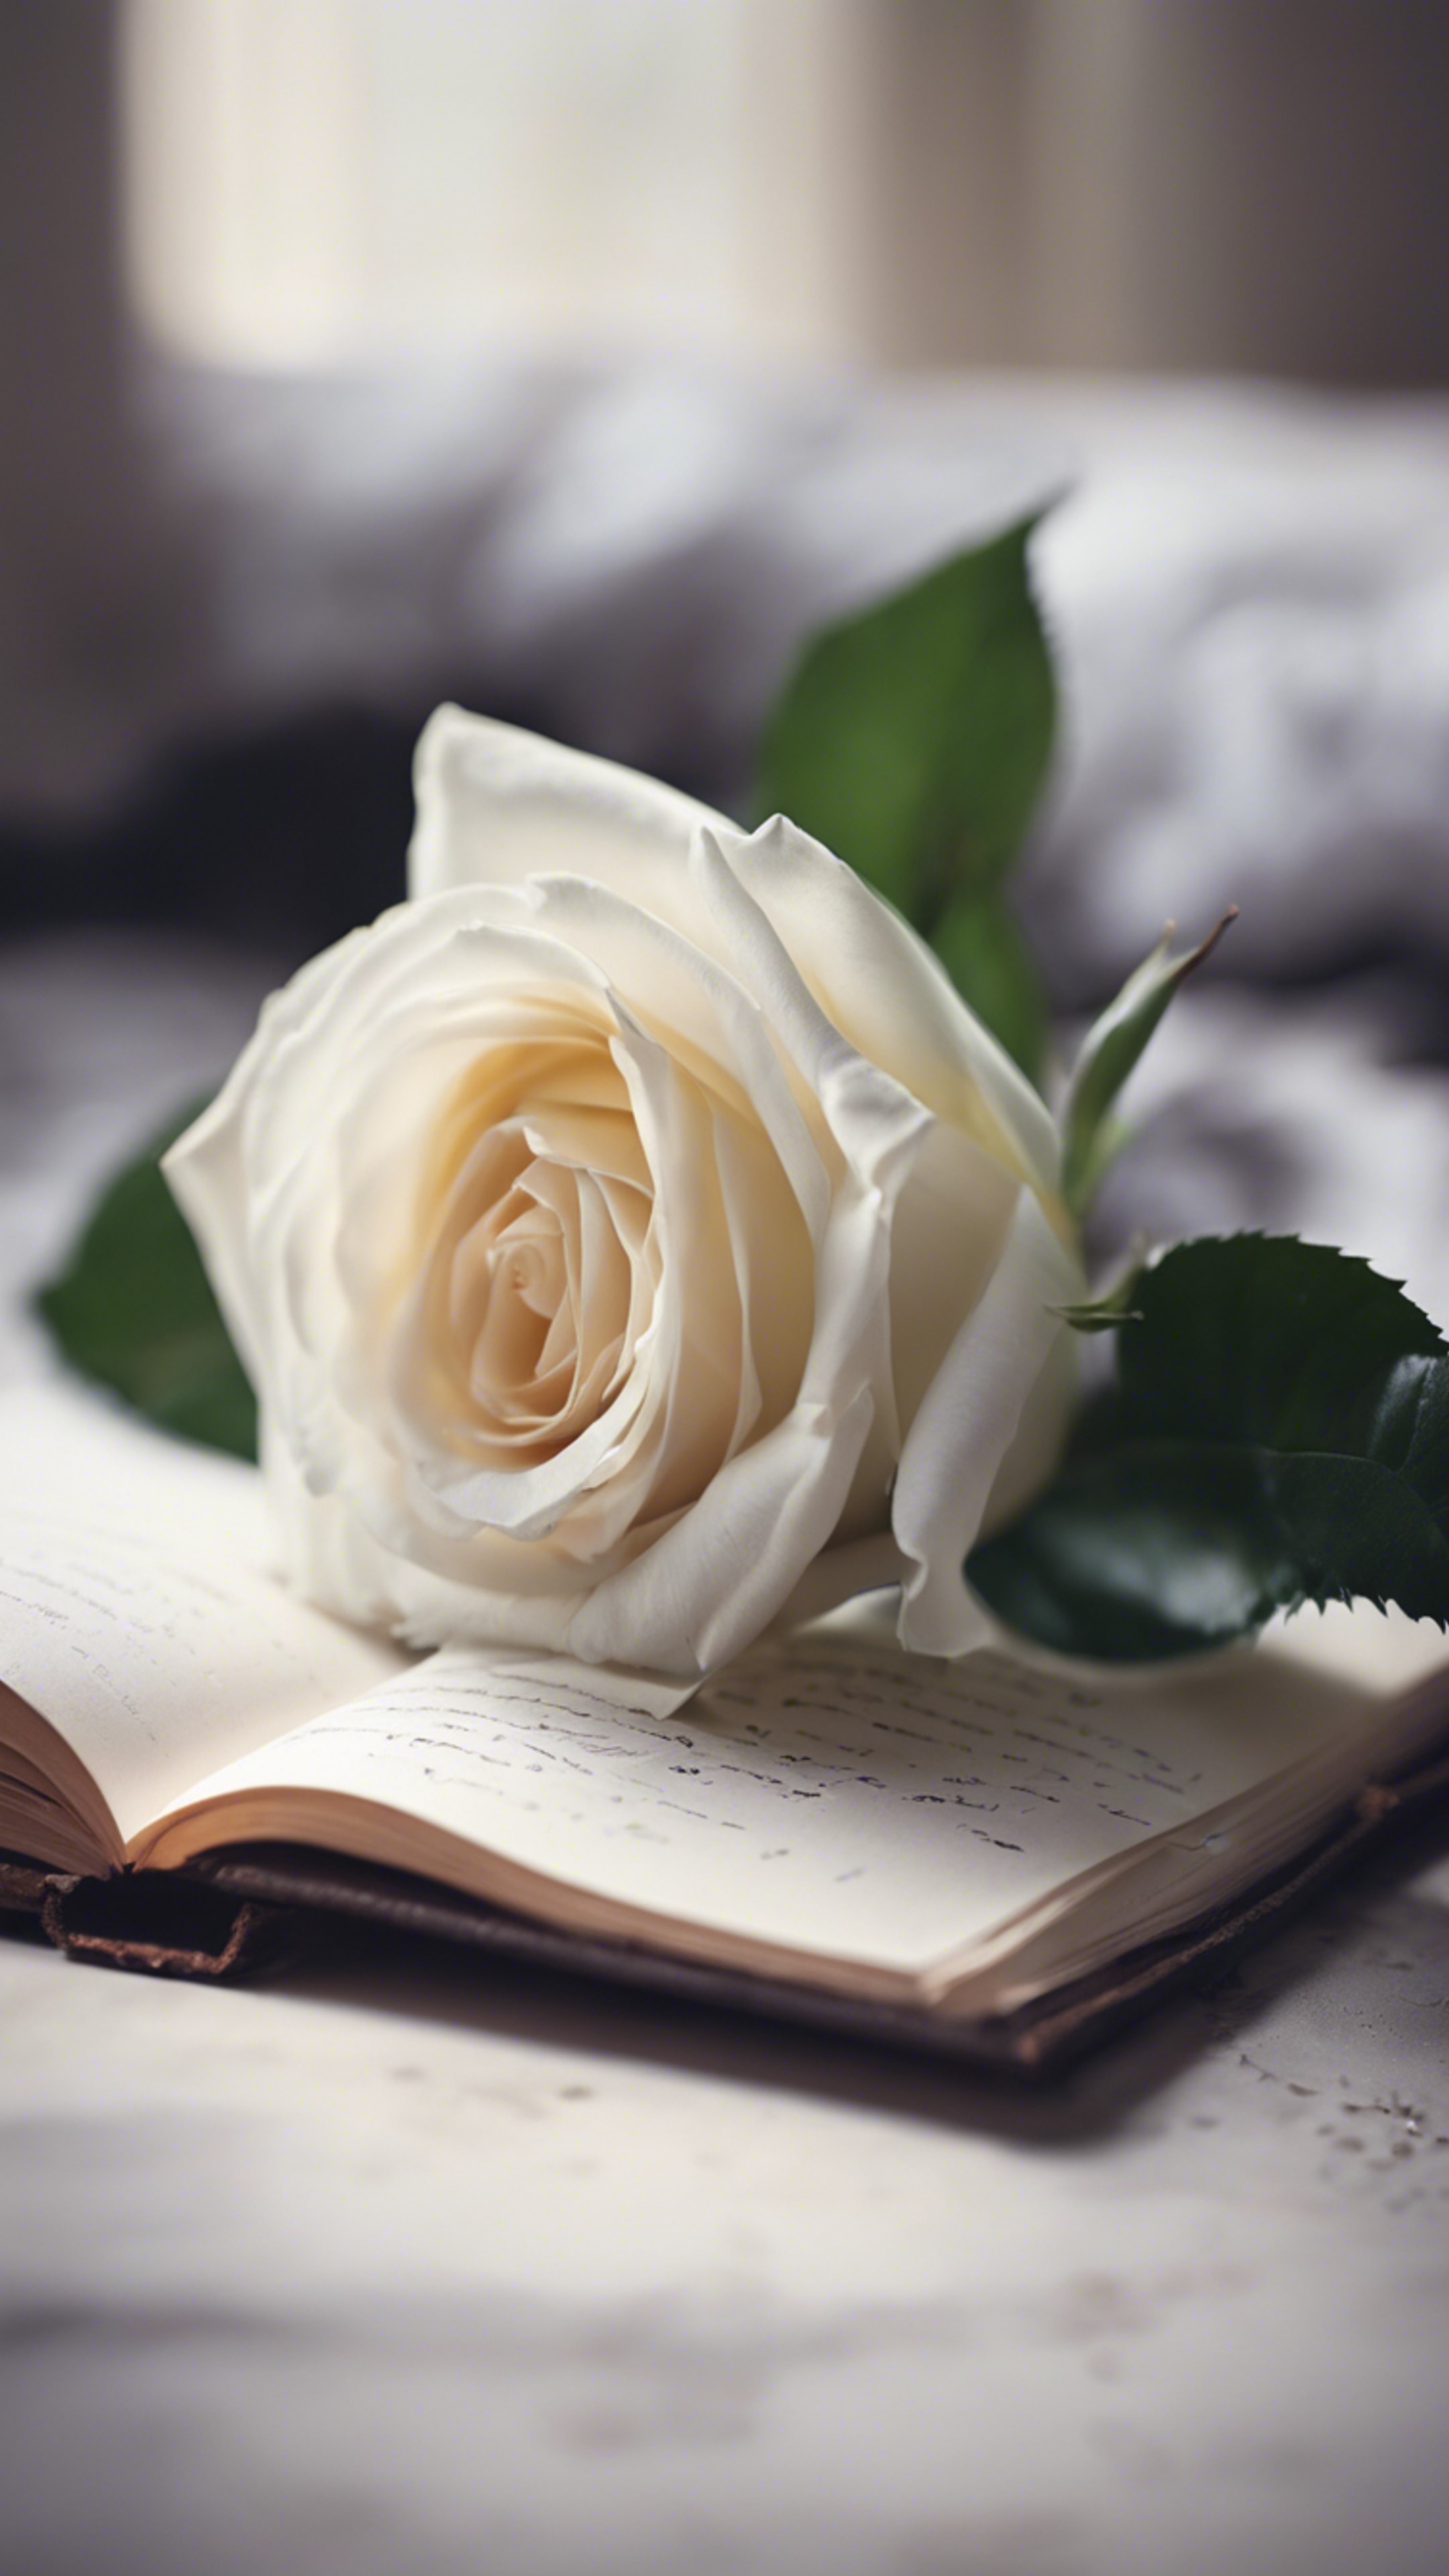 A handwritten confession of love adorned by a fresh, white rose.壁紙[ca91da3bae694a85a8d6]